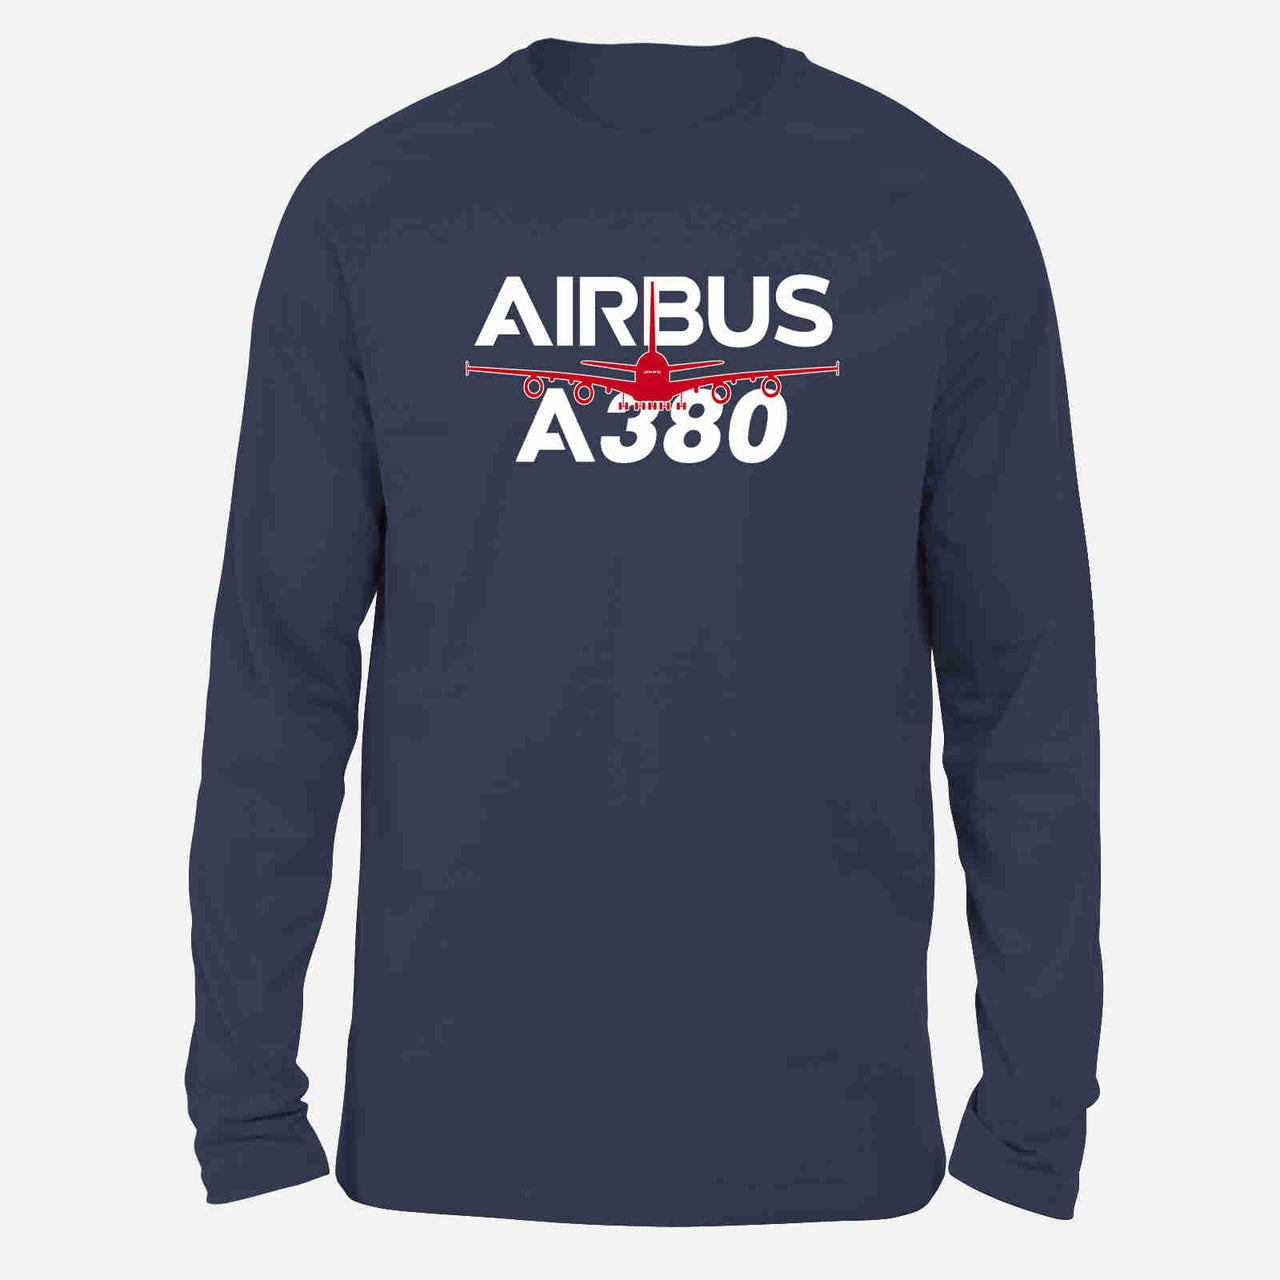 Amazing Airbus A380 Designed Long-Sleeve T-Shirts